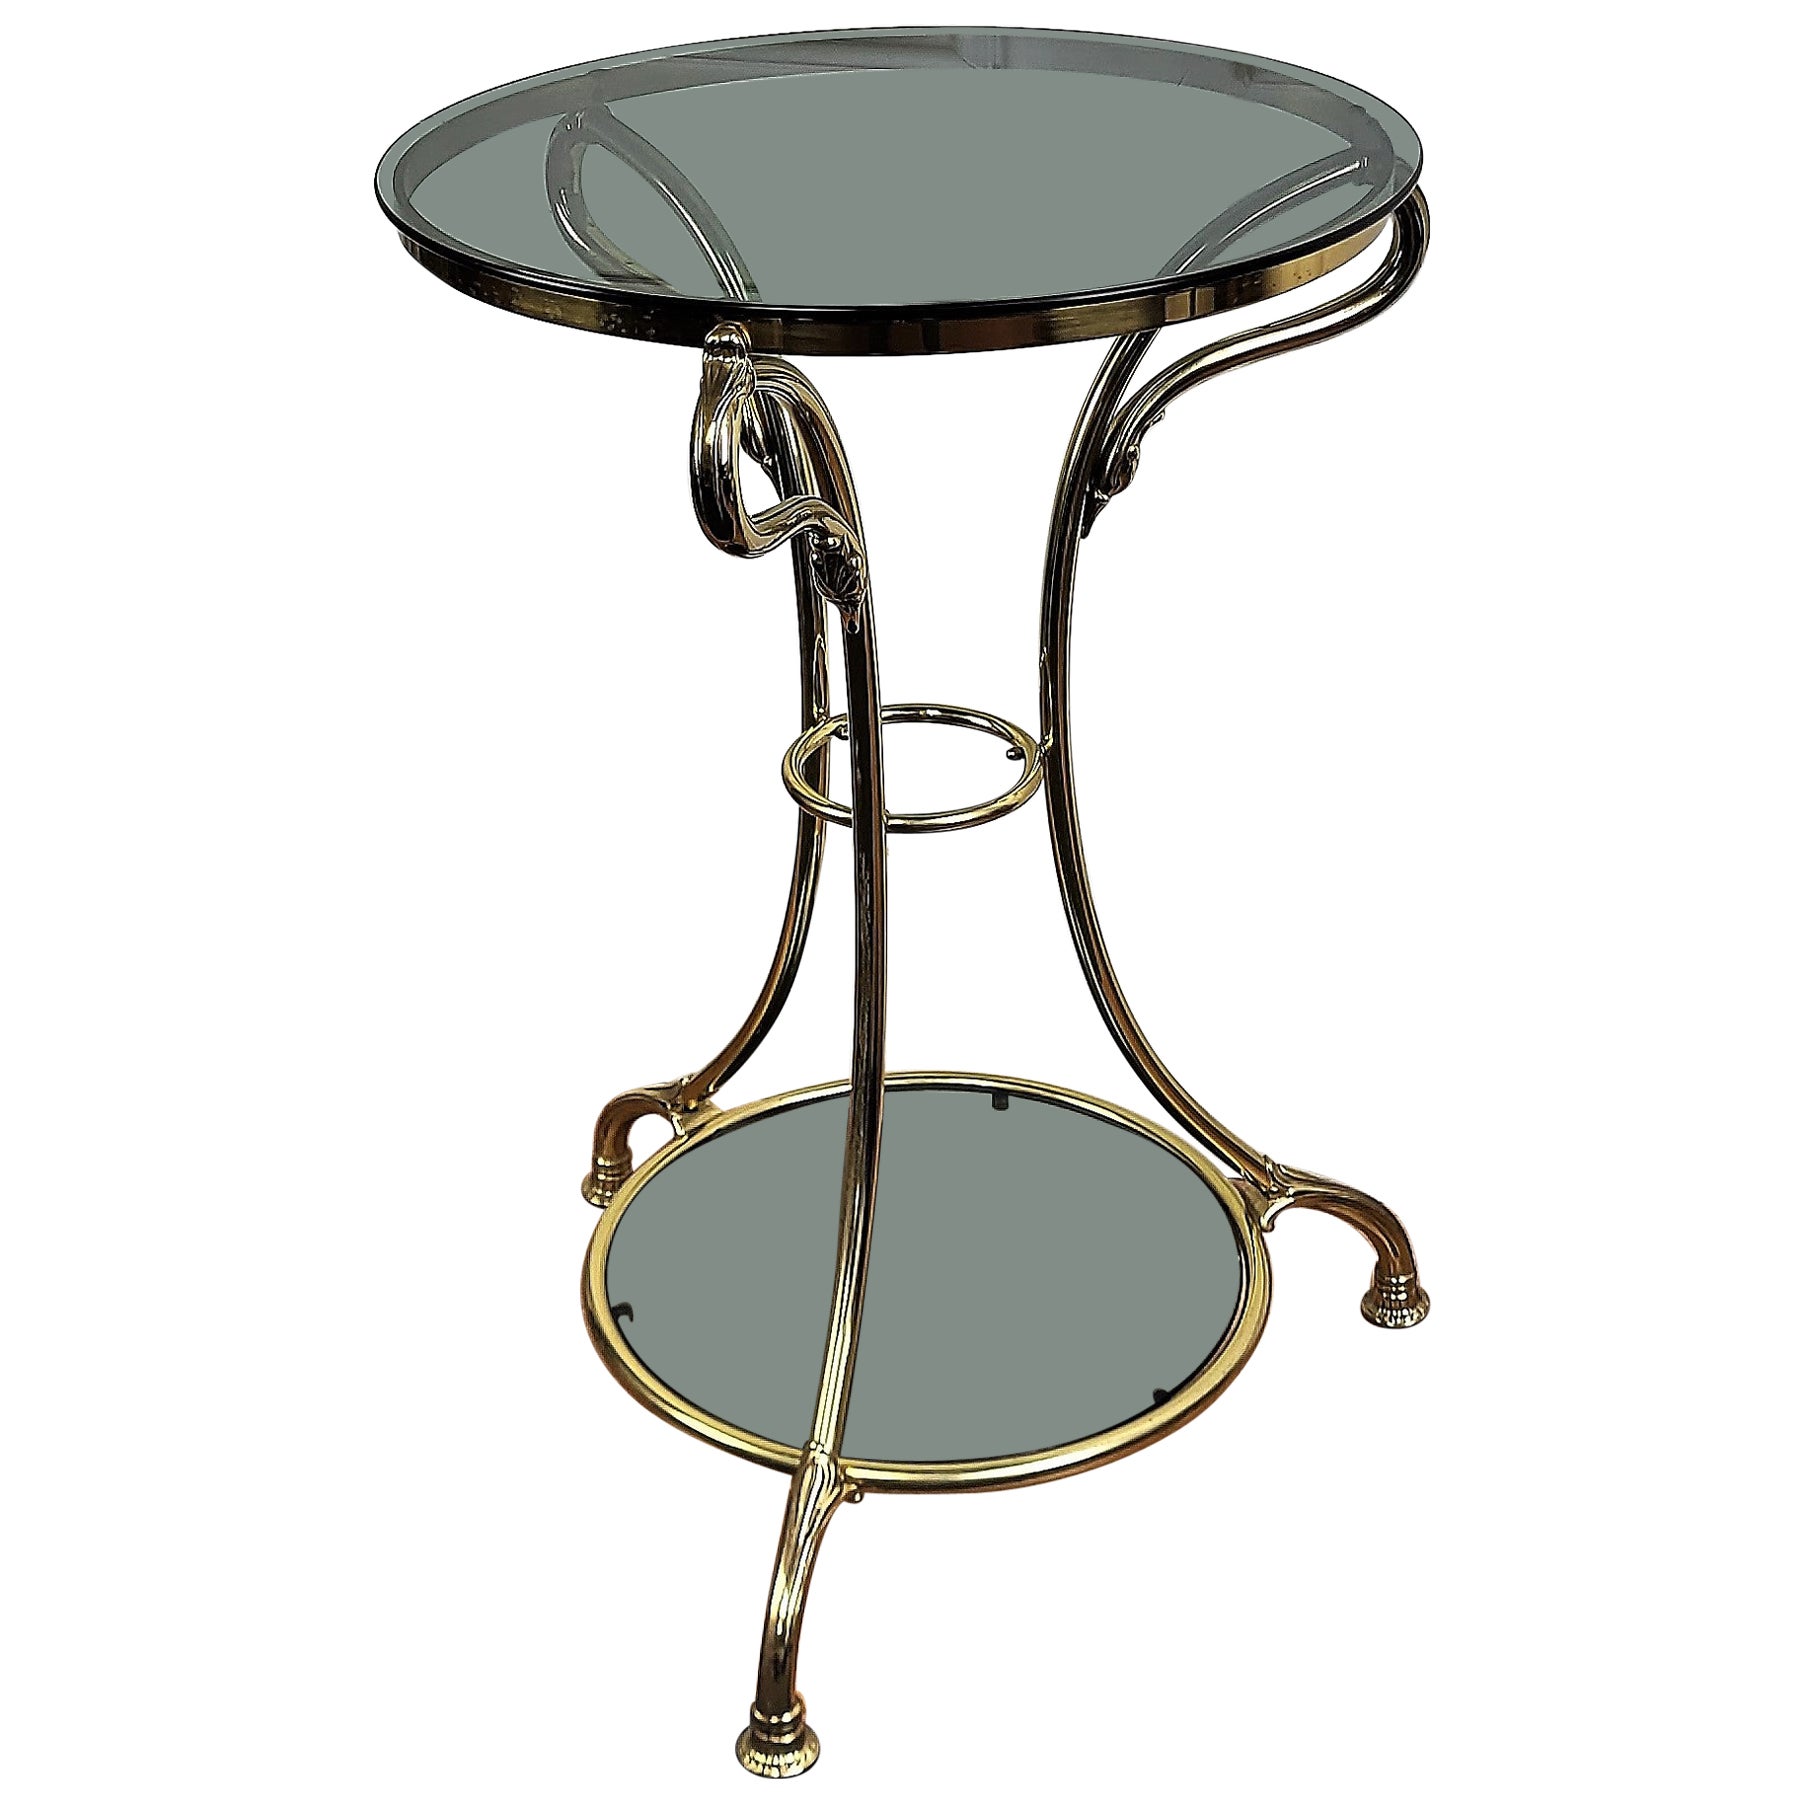 1960s Italian Modern Regency Neoclassical Brass Smoked Glass Gueridon Side Table For Sale